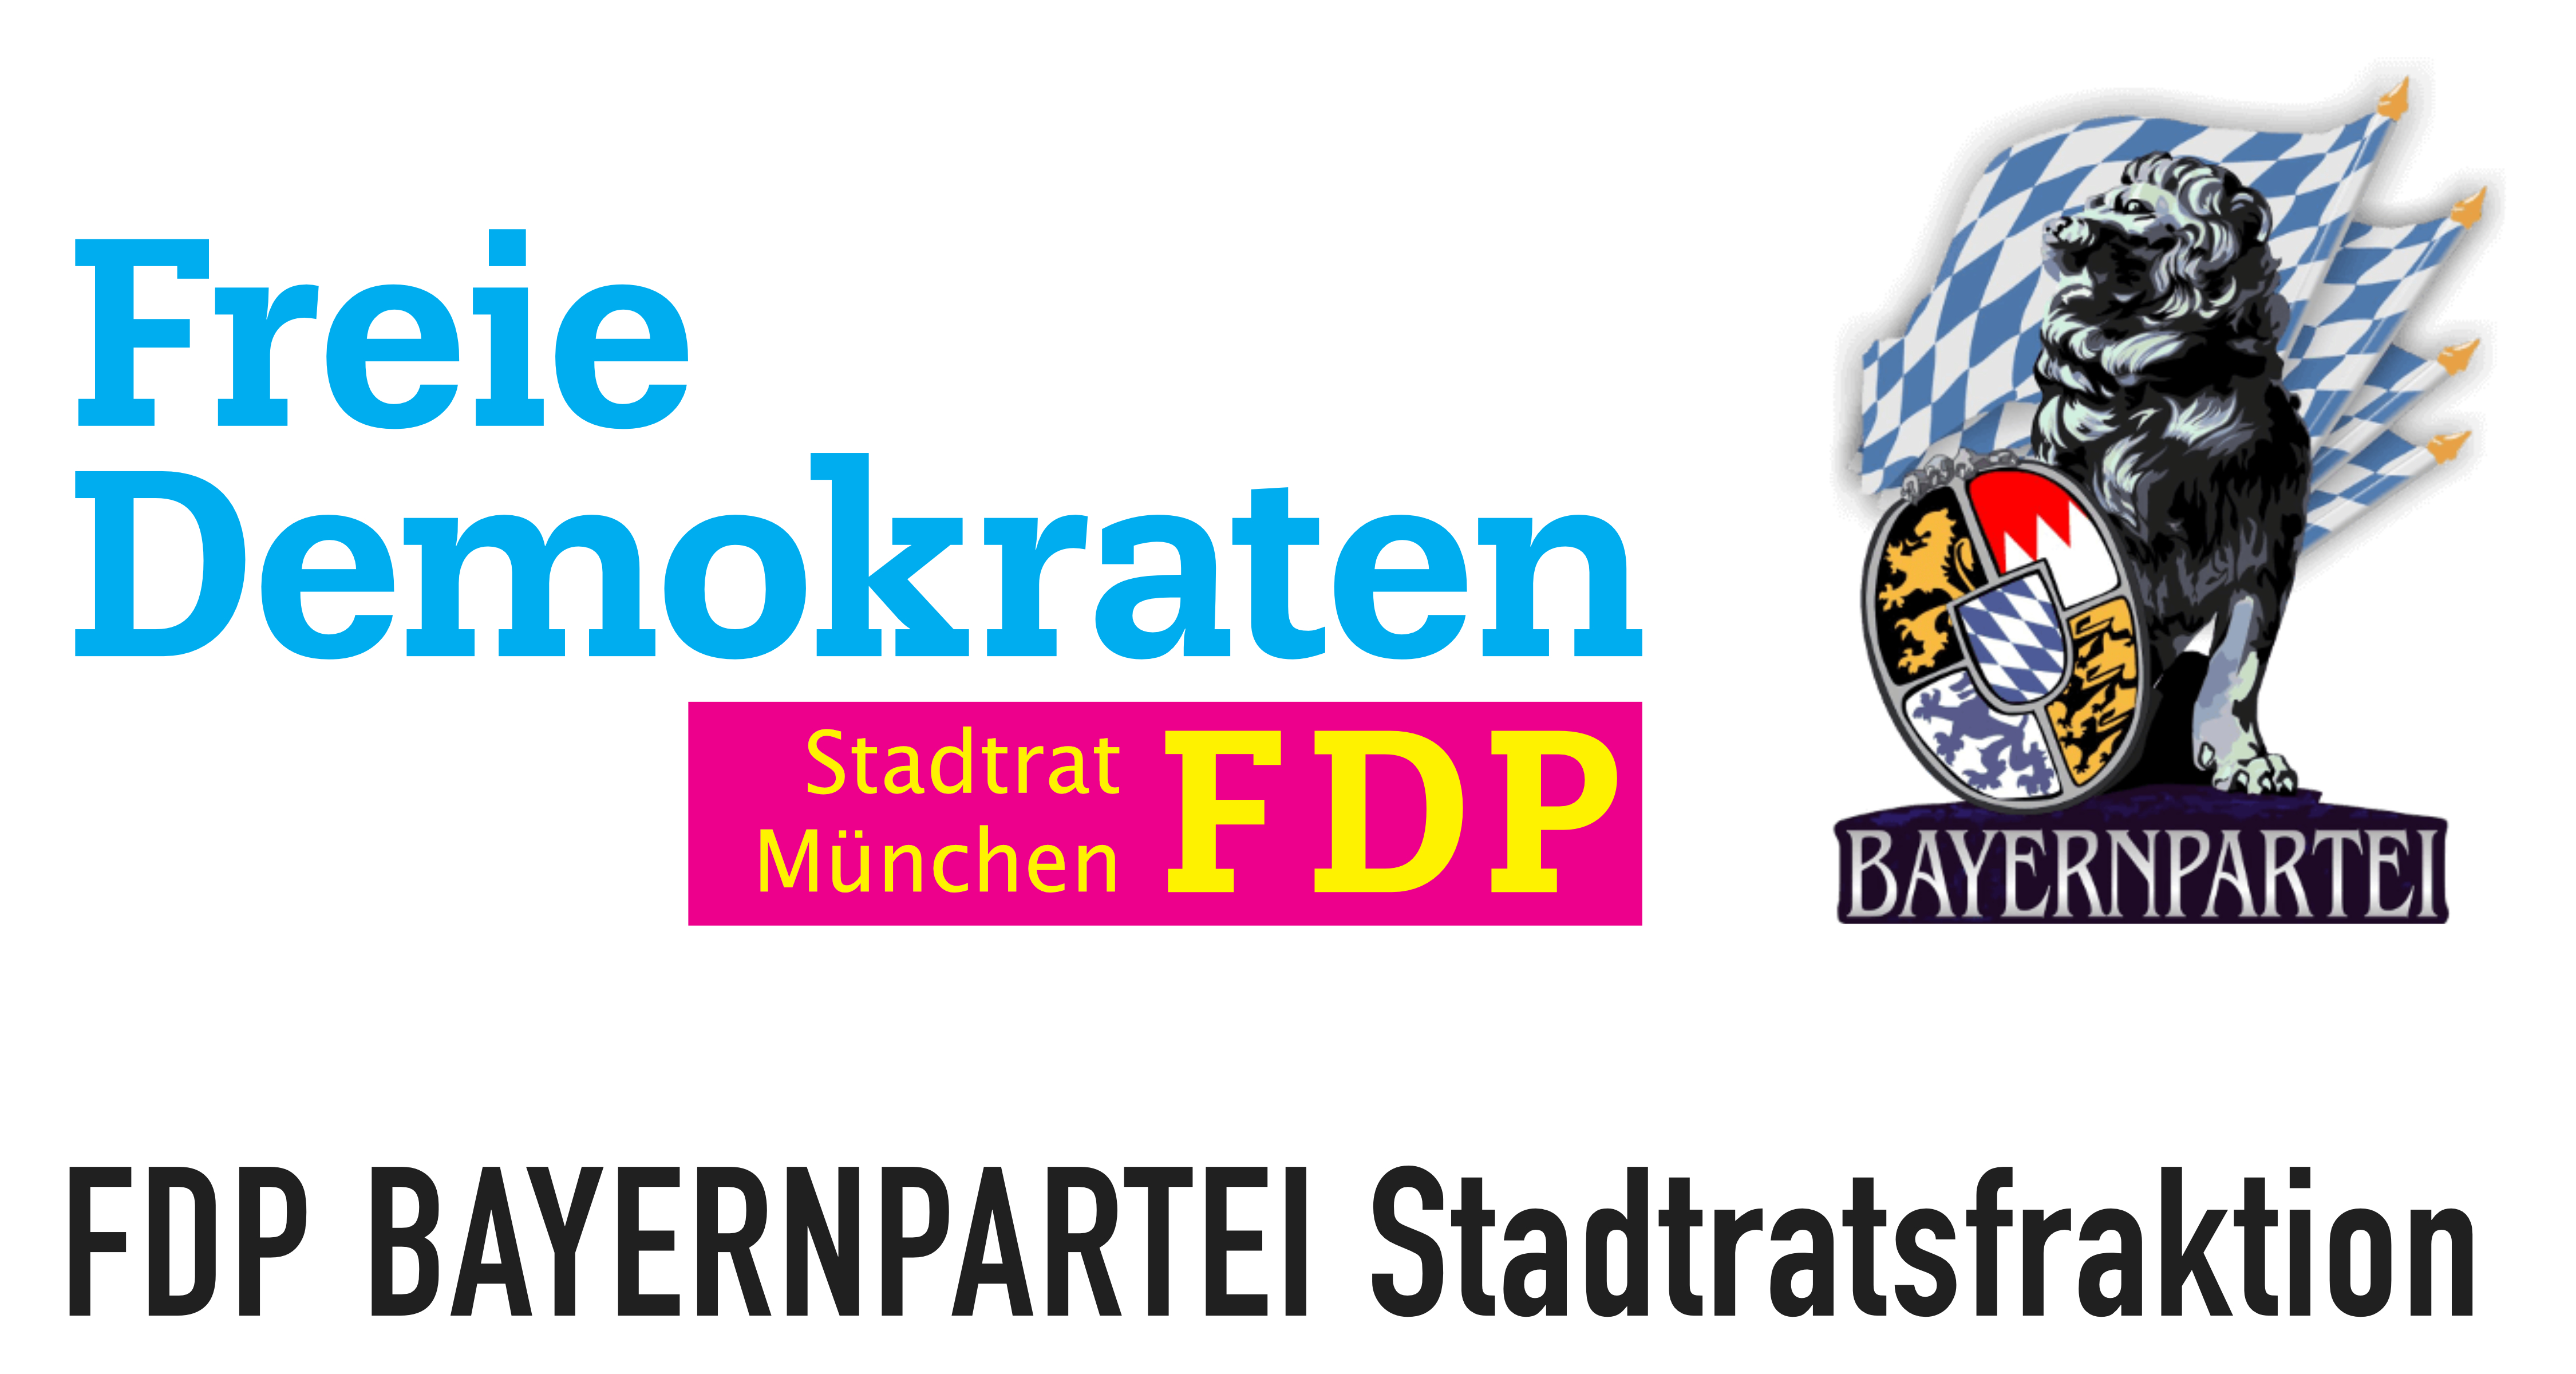 FDP BAYERNPARTEI Stadtratsfraktion